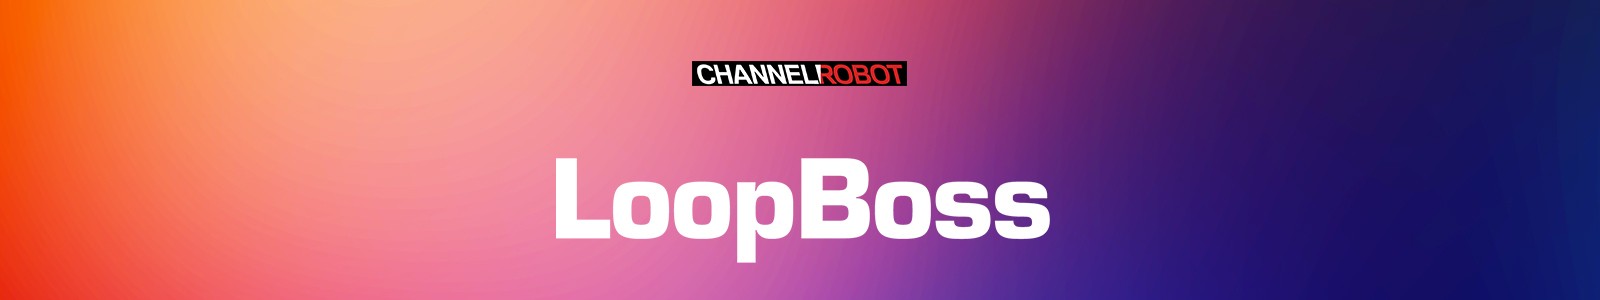 Channel Robot LoopBoss